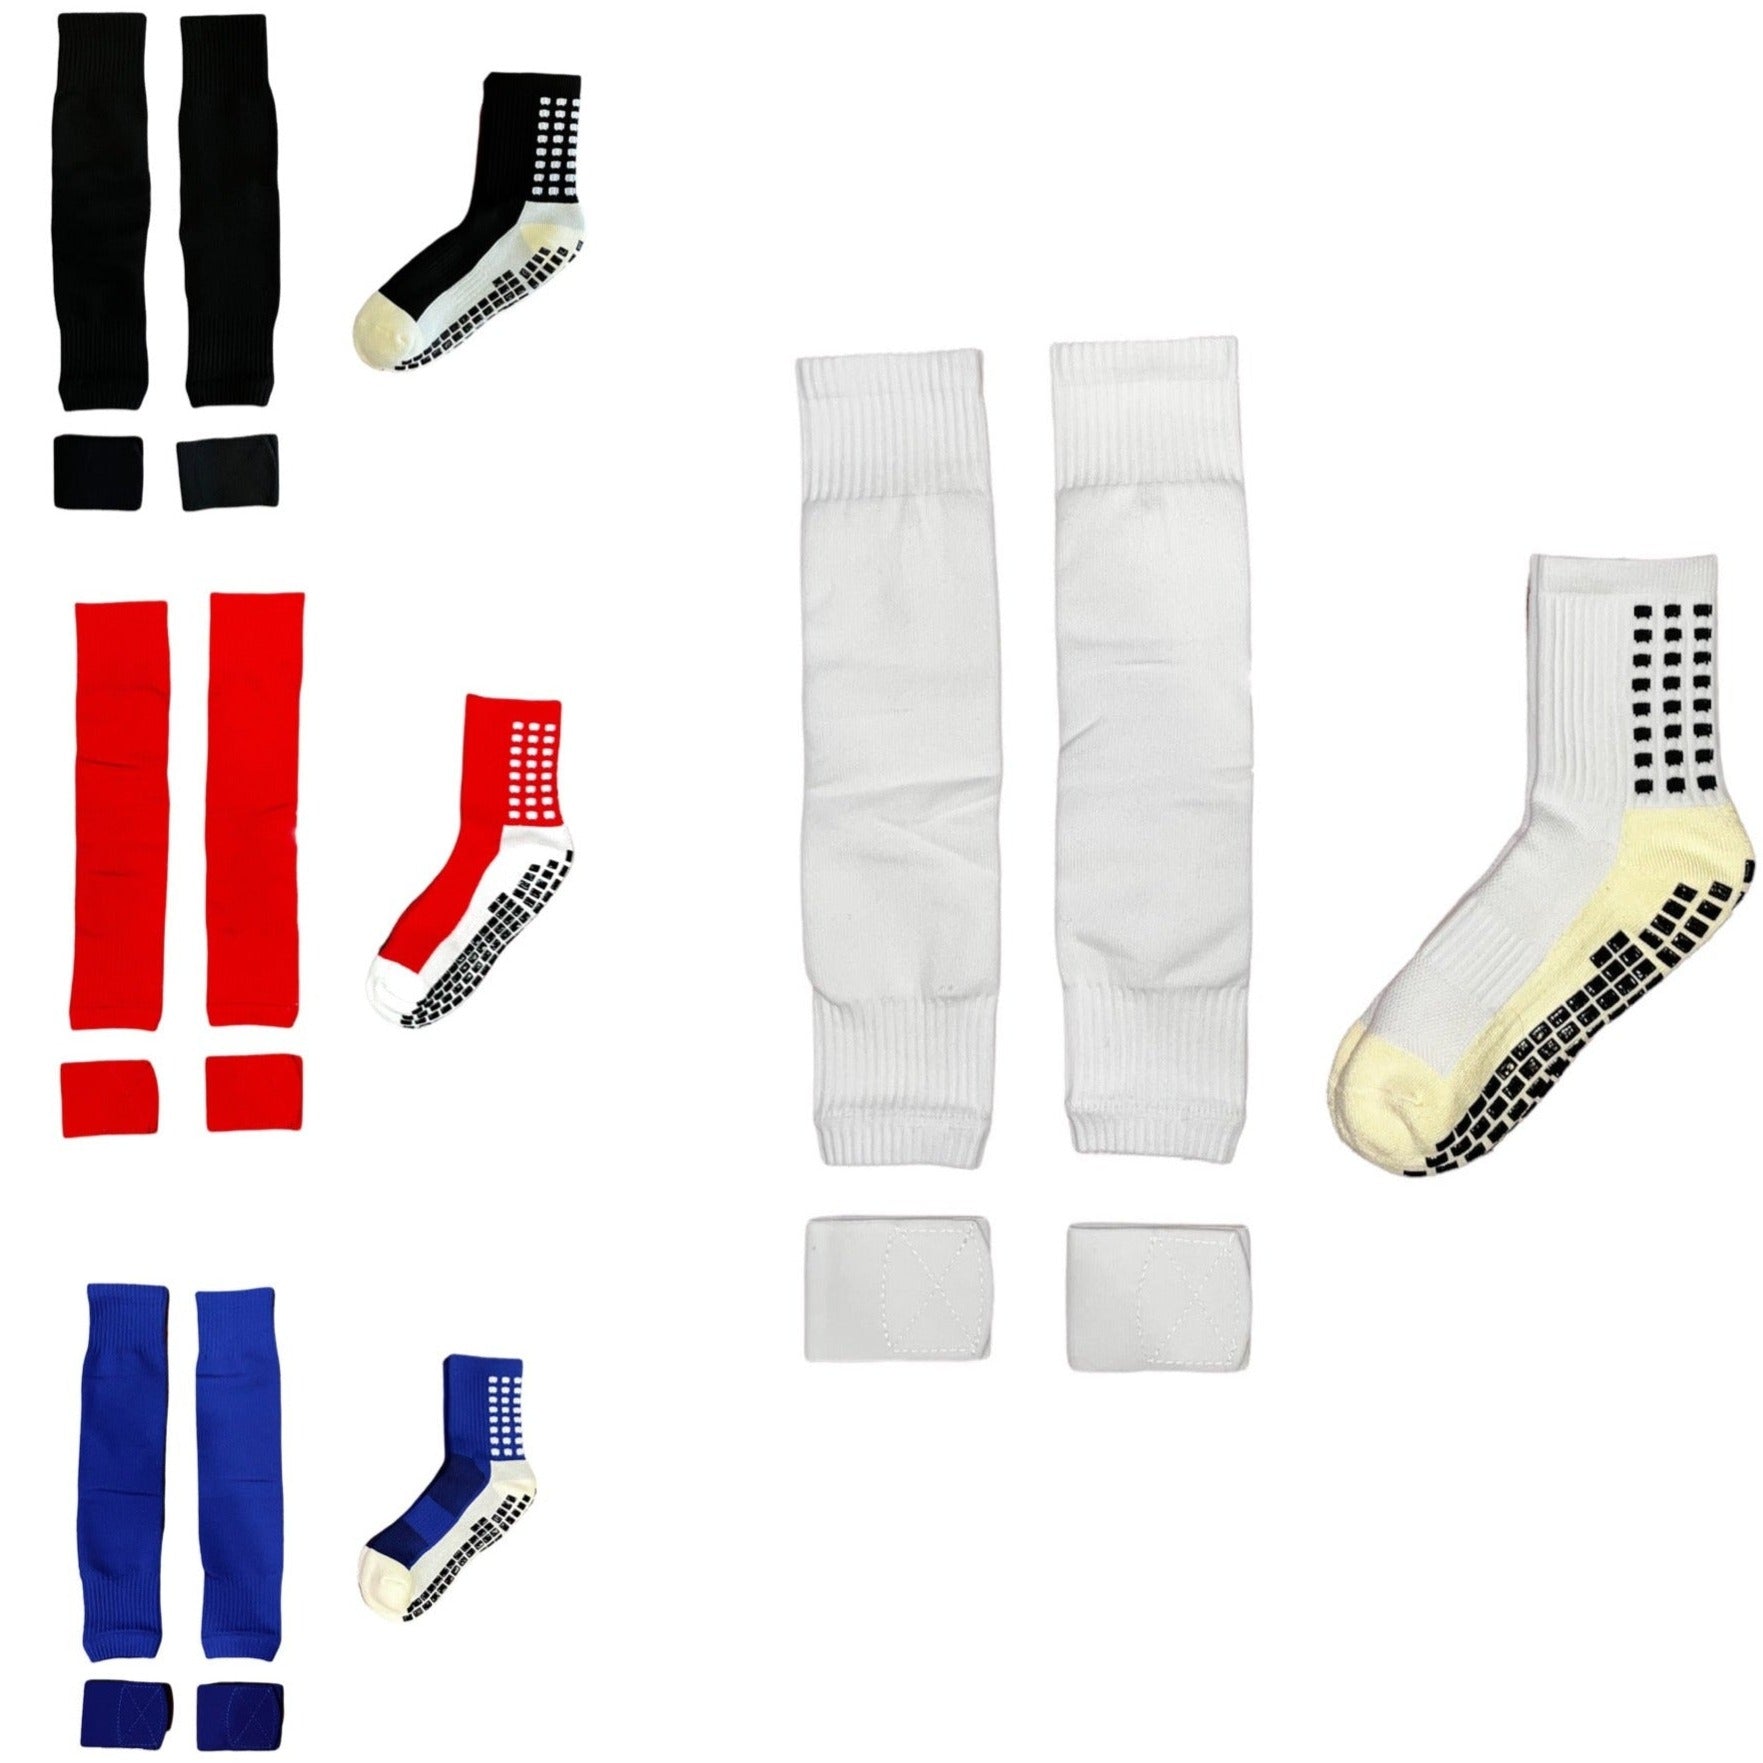 The Grip Sock Grip Socks, Leg Sleeves and Shin Guard Straps Bundle Set RED